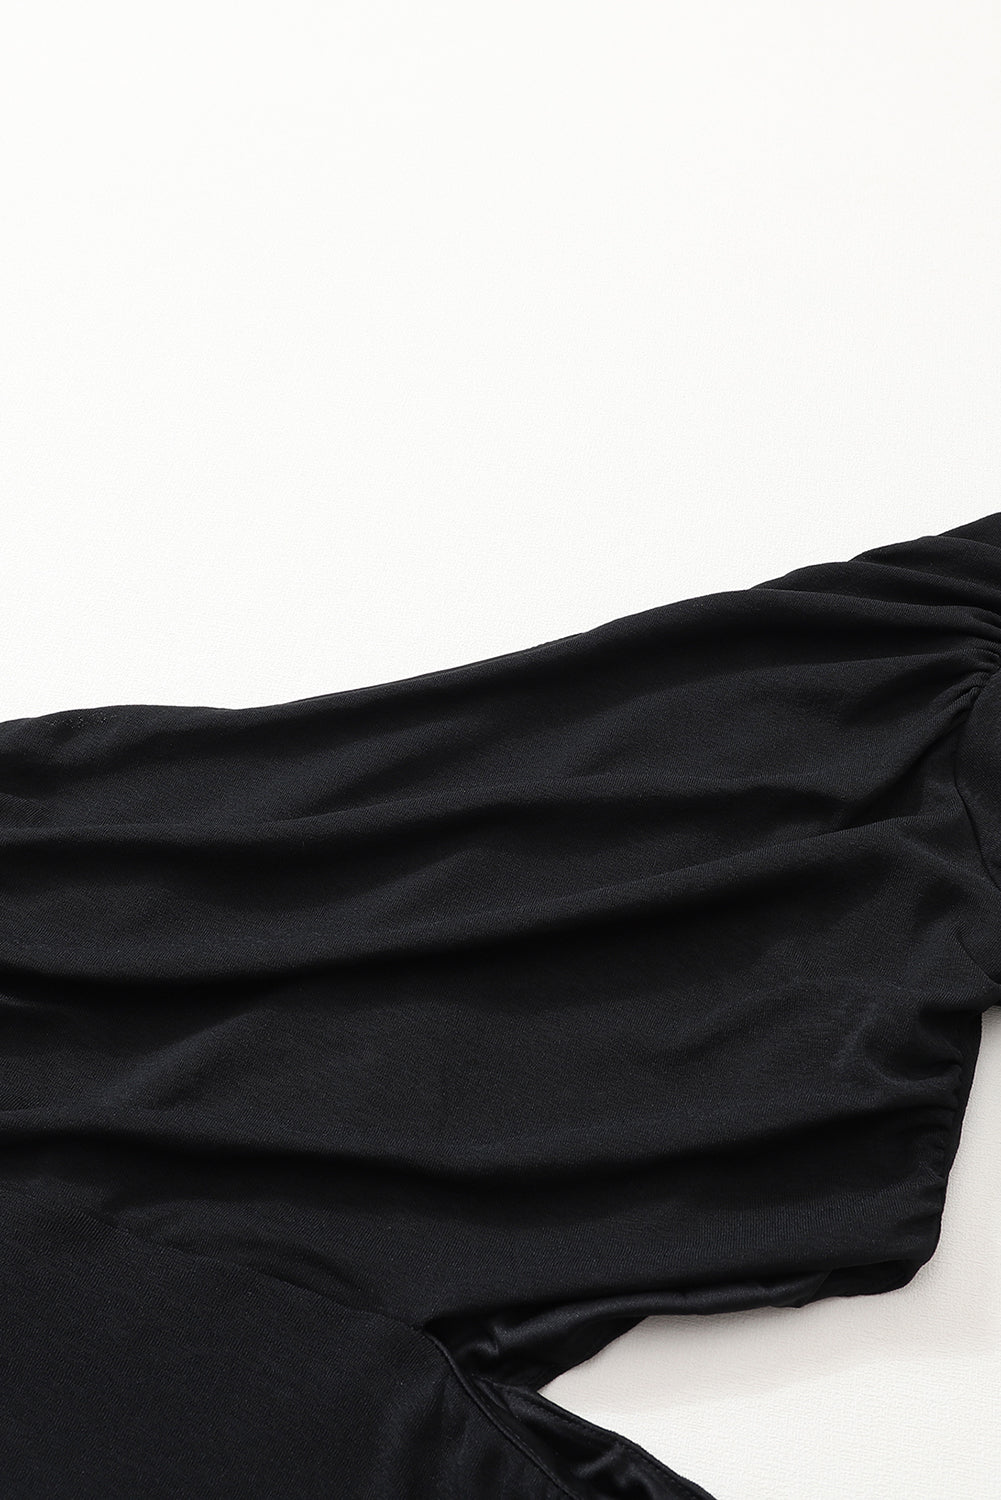 Black  Asymmetric One Shoulder Cutout Bodycon Dress